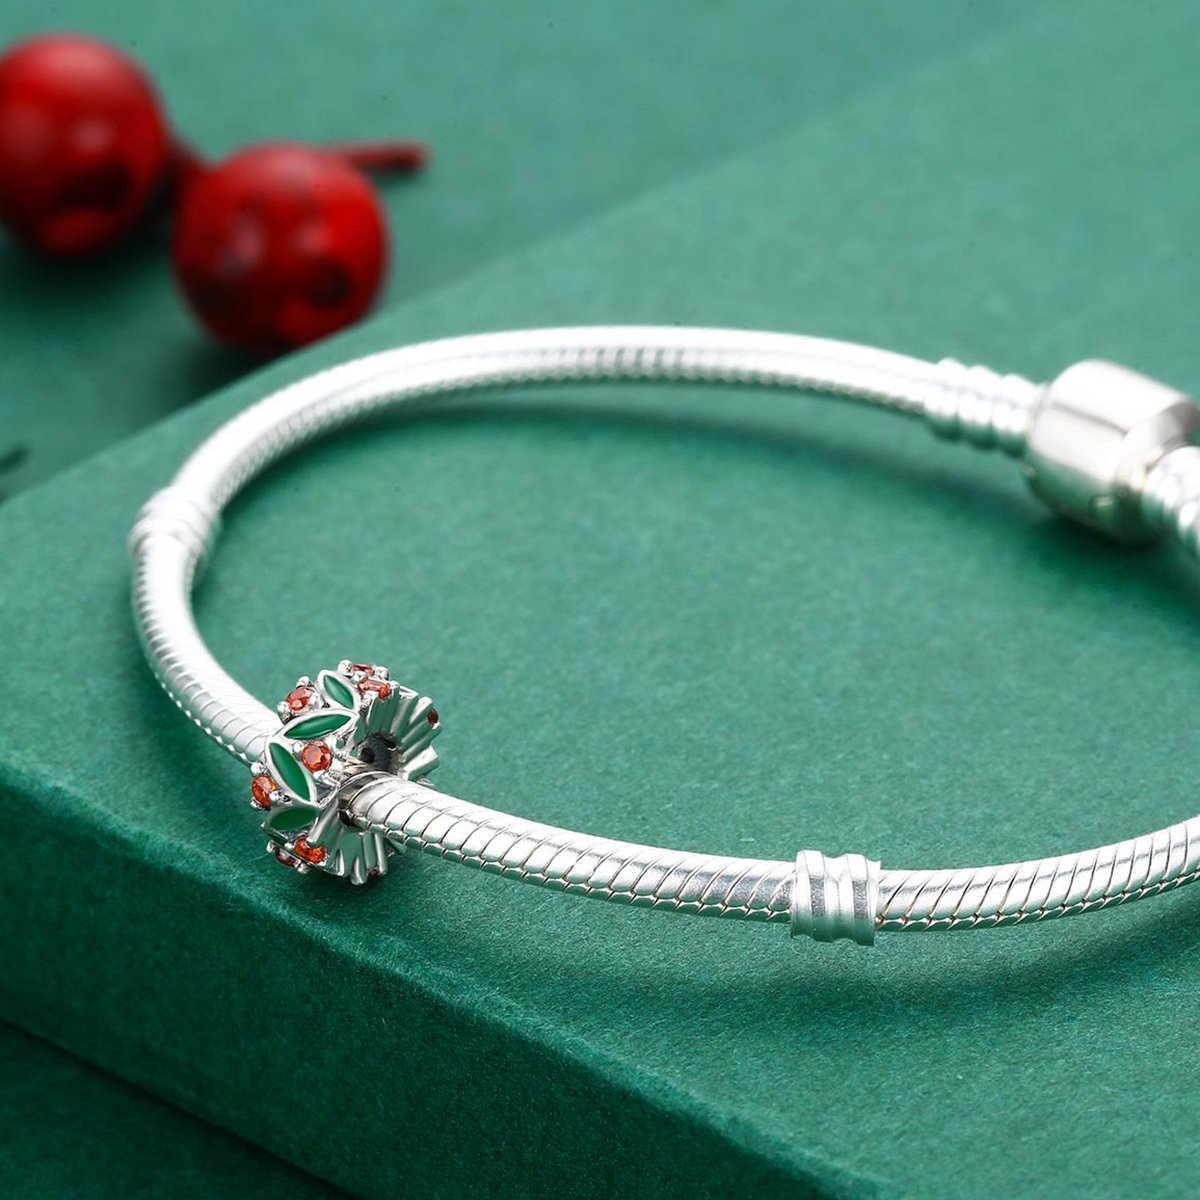 Sterling 925 silver charm the jungle circle bead pendant fits Pandora charm and European charm bracelet Xaxe.com